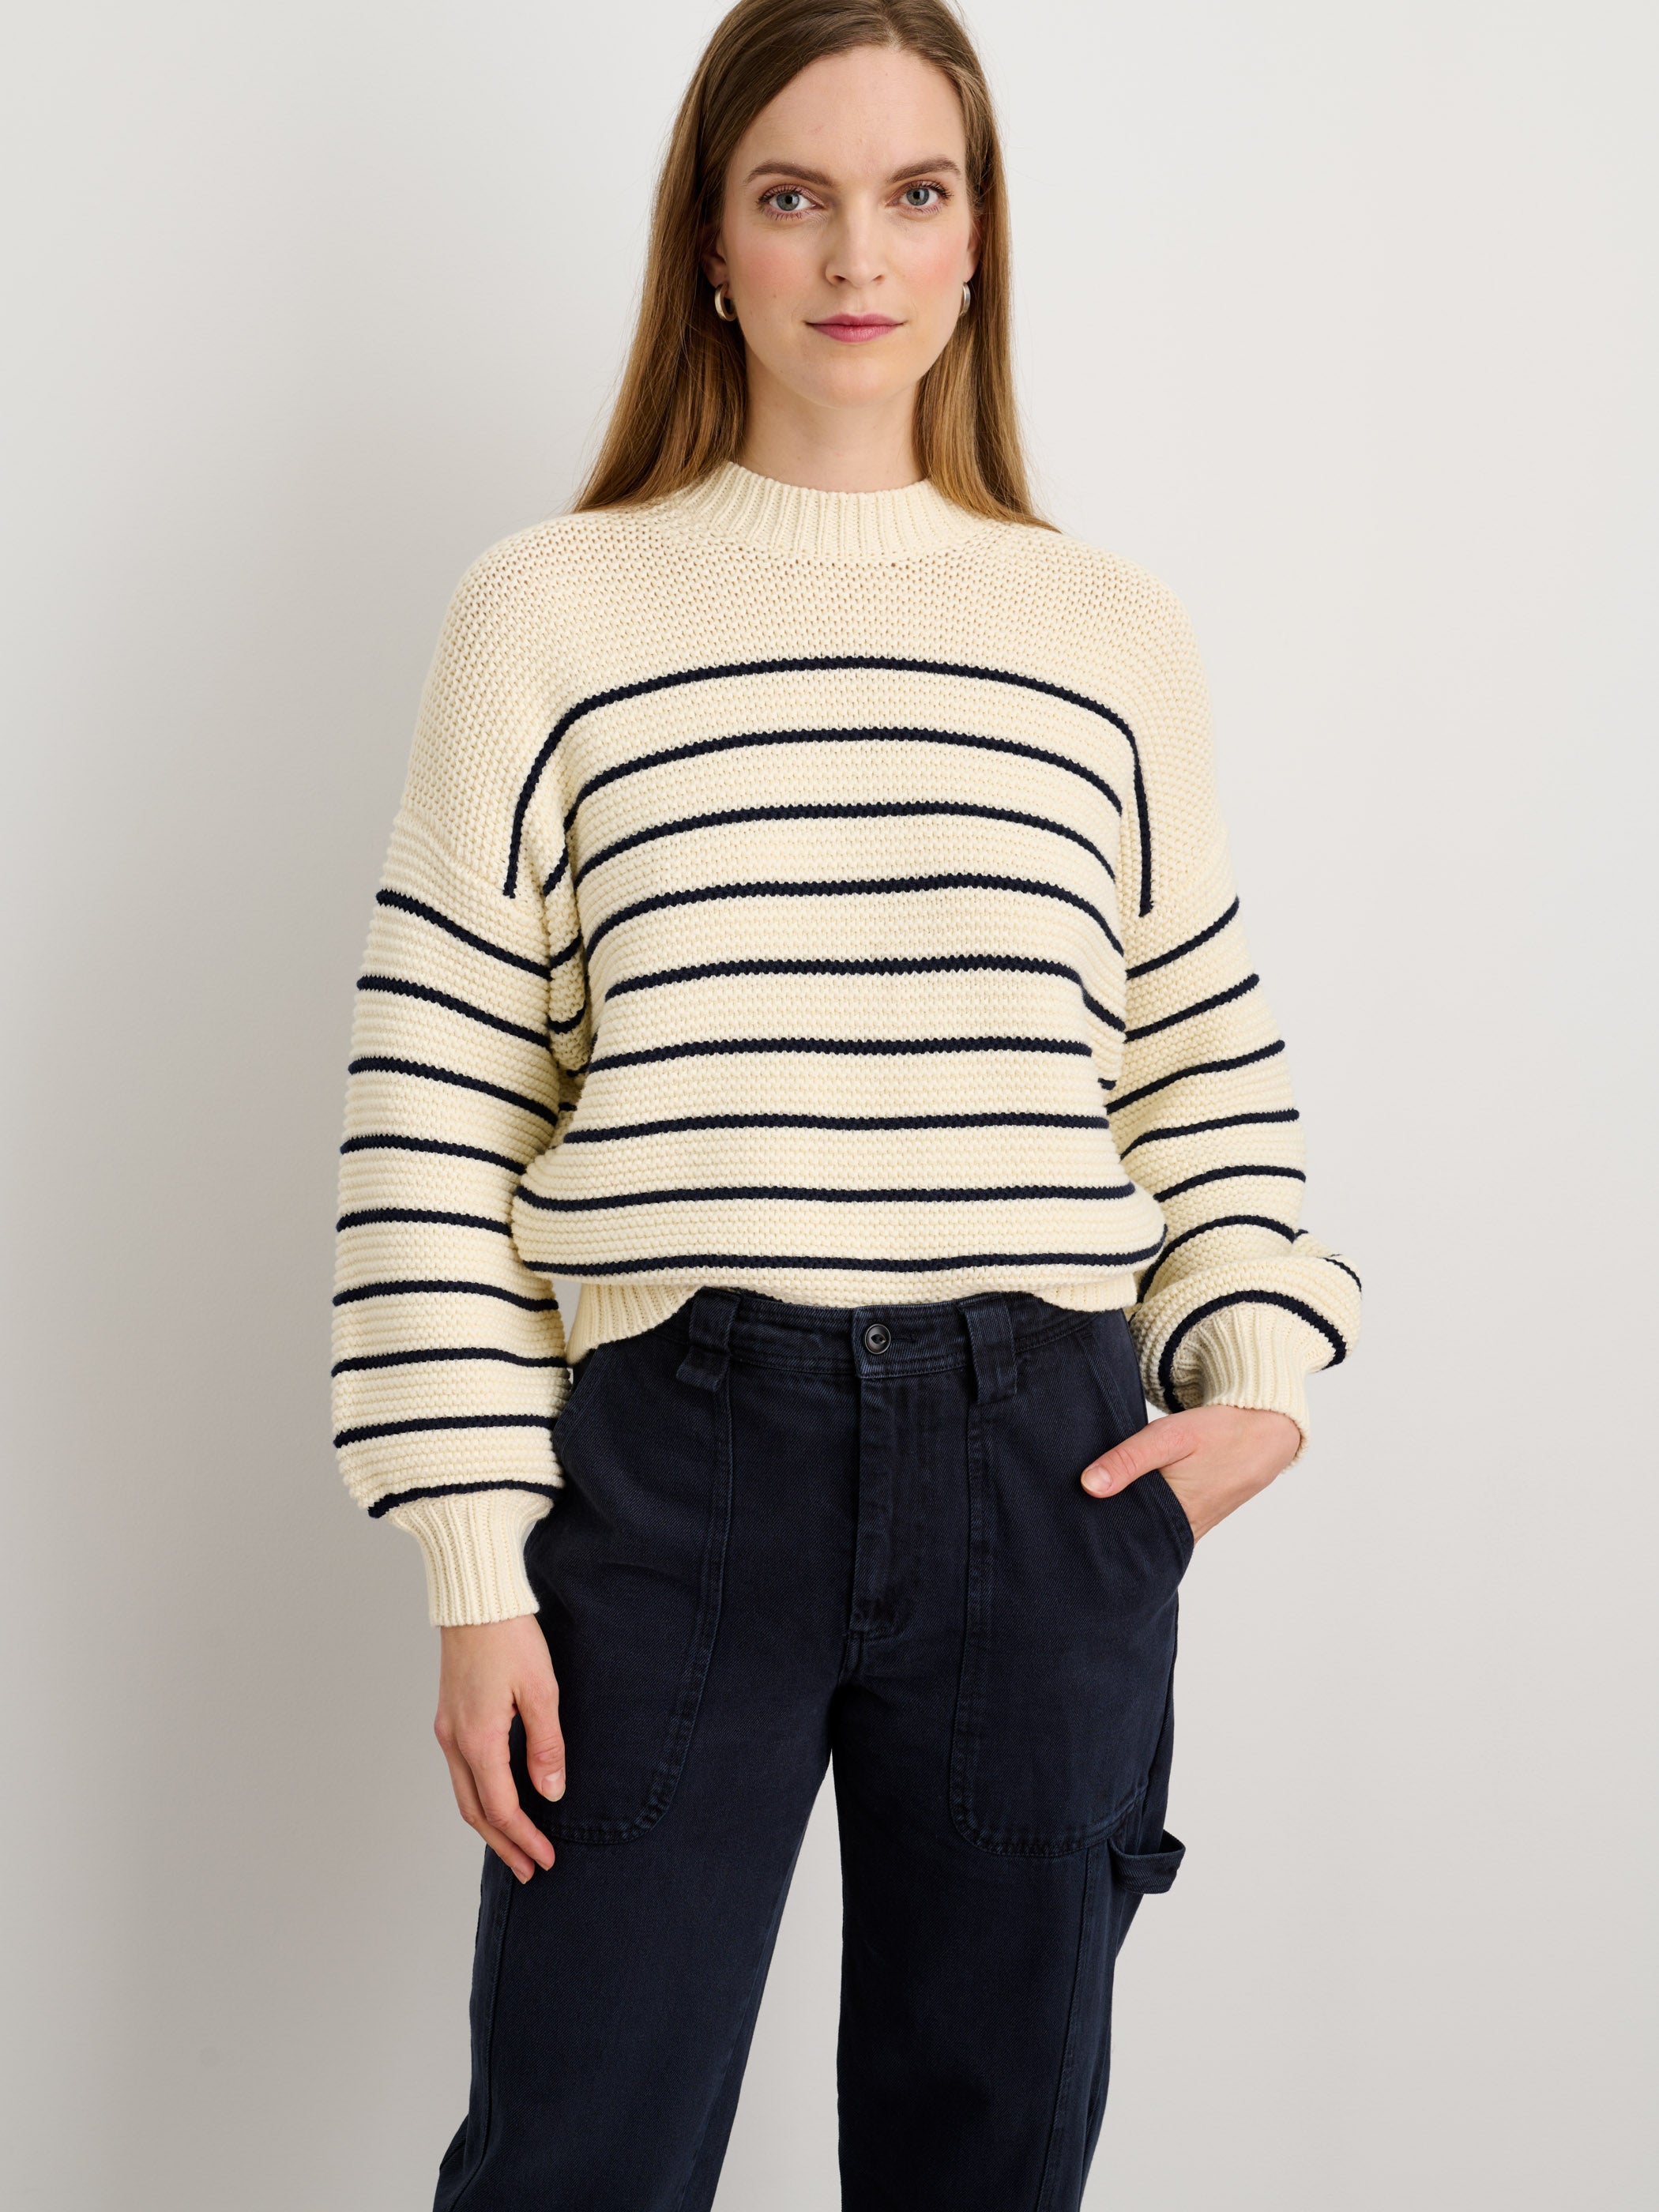 Louis Vuitton Signature Chunky Striped Pullover Knit Sweater Size Xs Ivory/Navy 1A9NRE Wool 69% Polypropylene24% Elastine1% Nylon6%